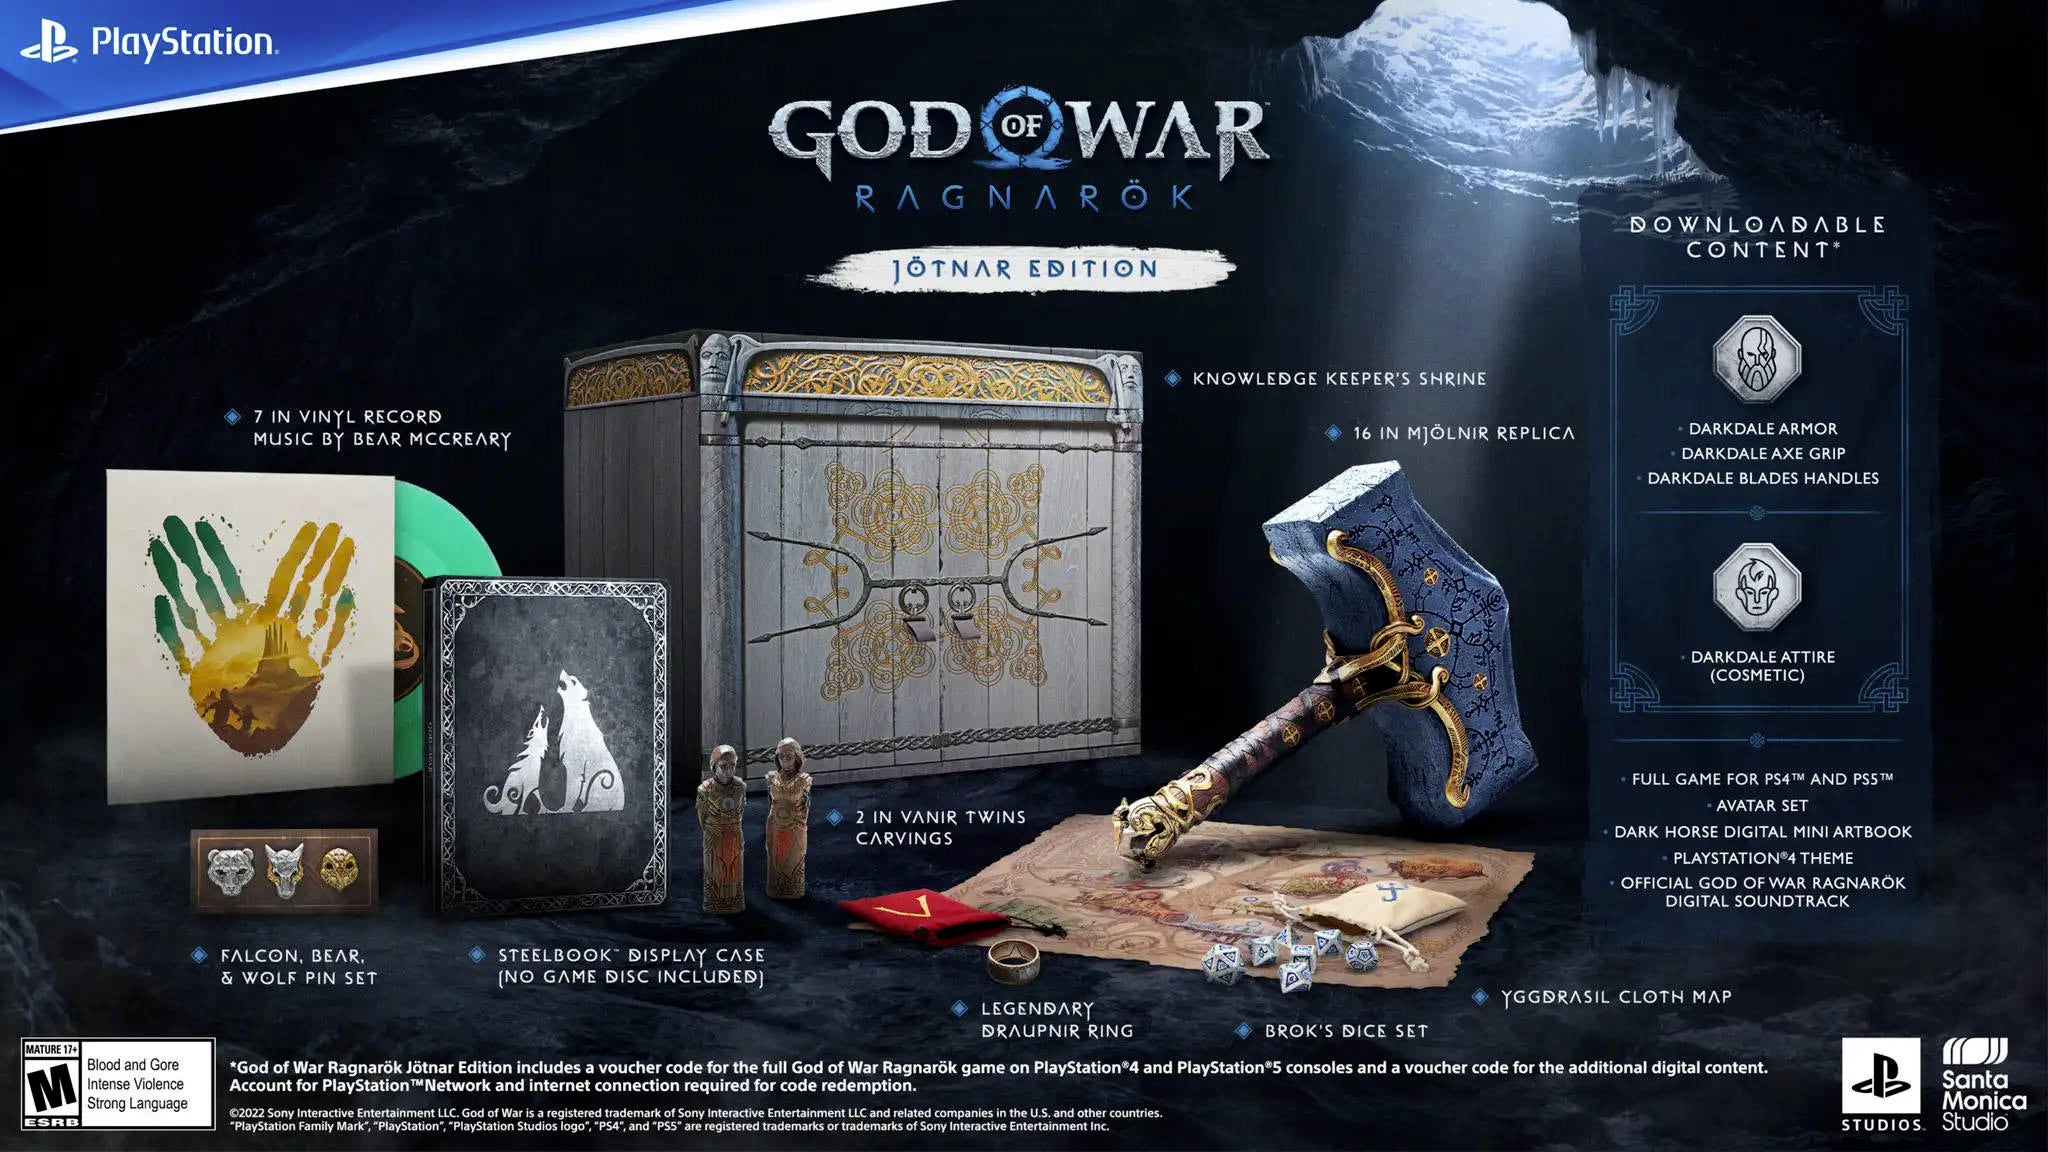 PS5 Digital Edition God of War Ragnarok Bundle